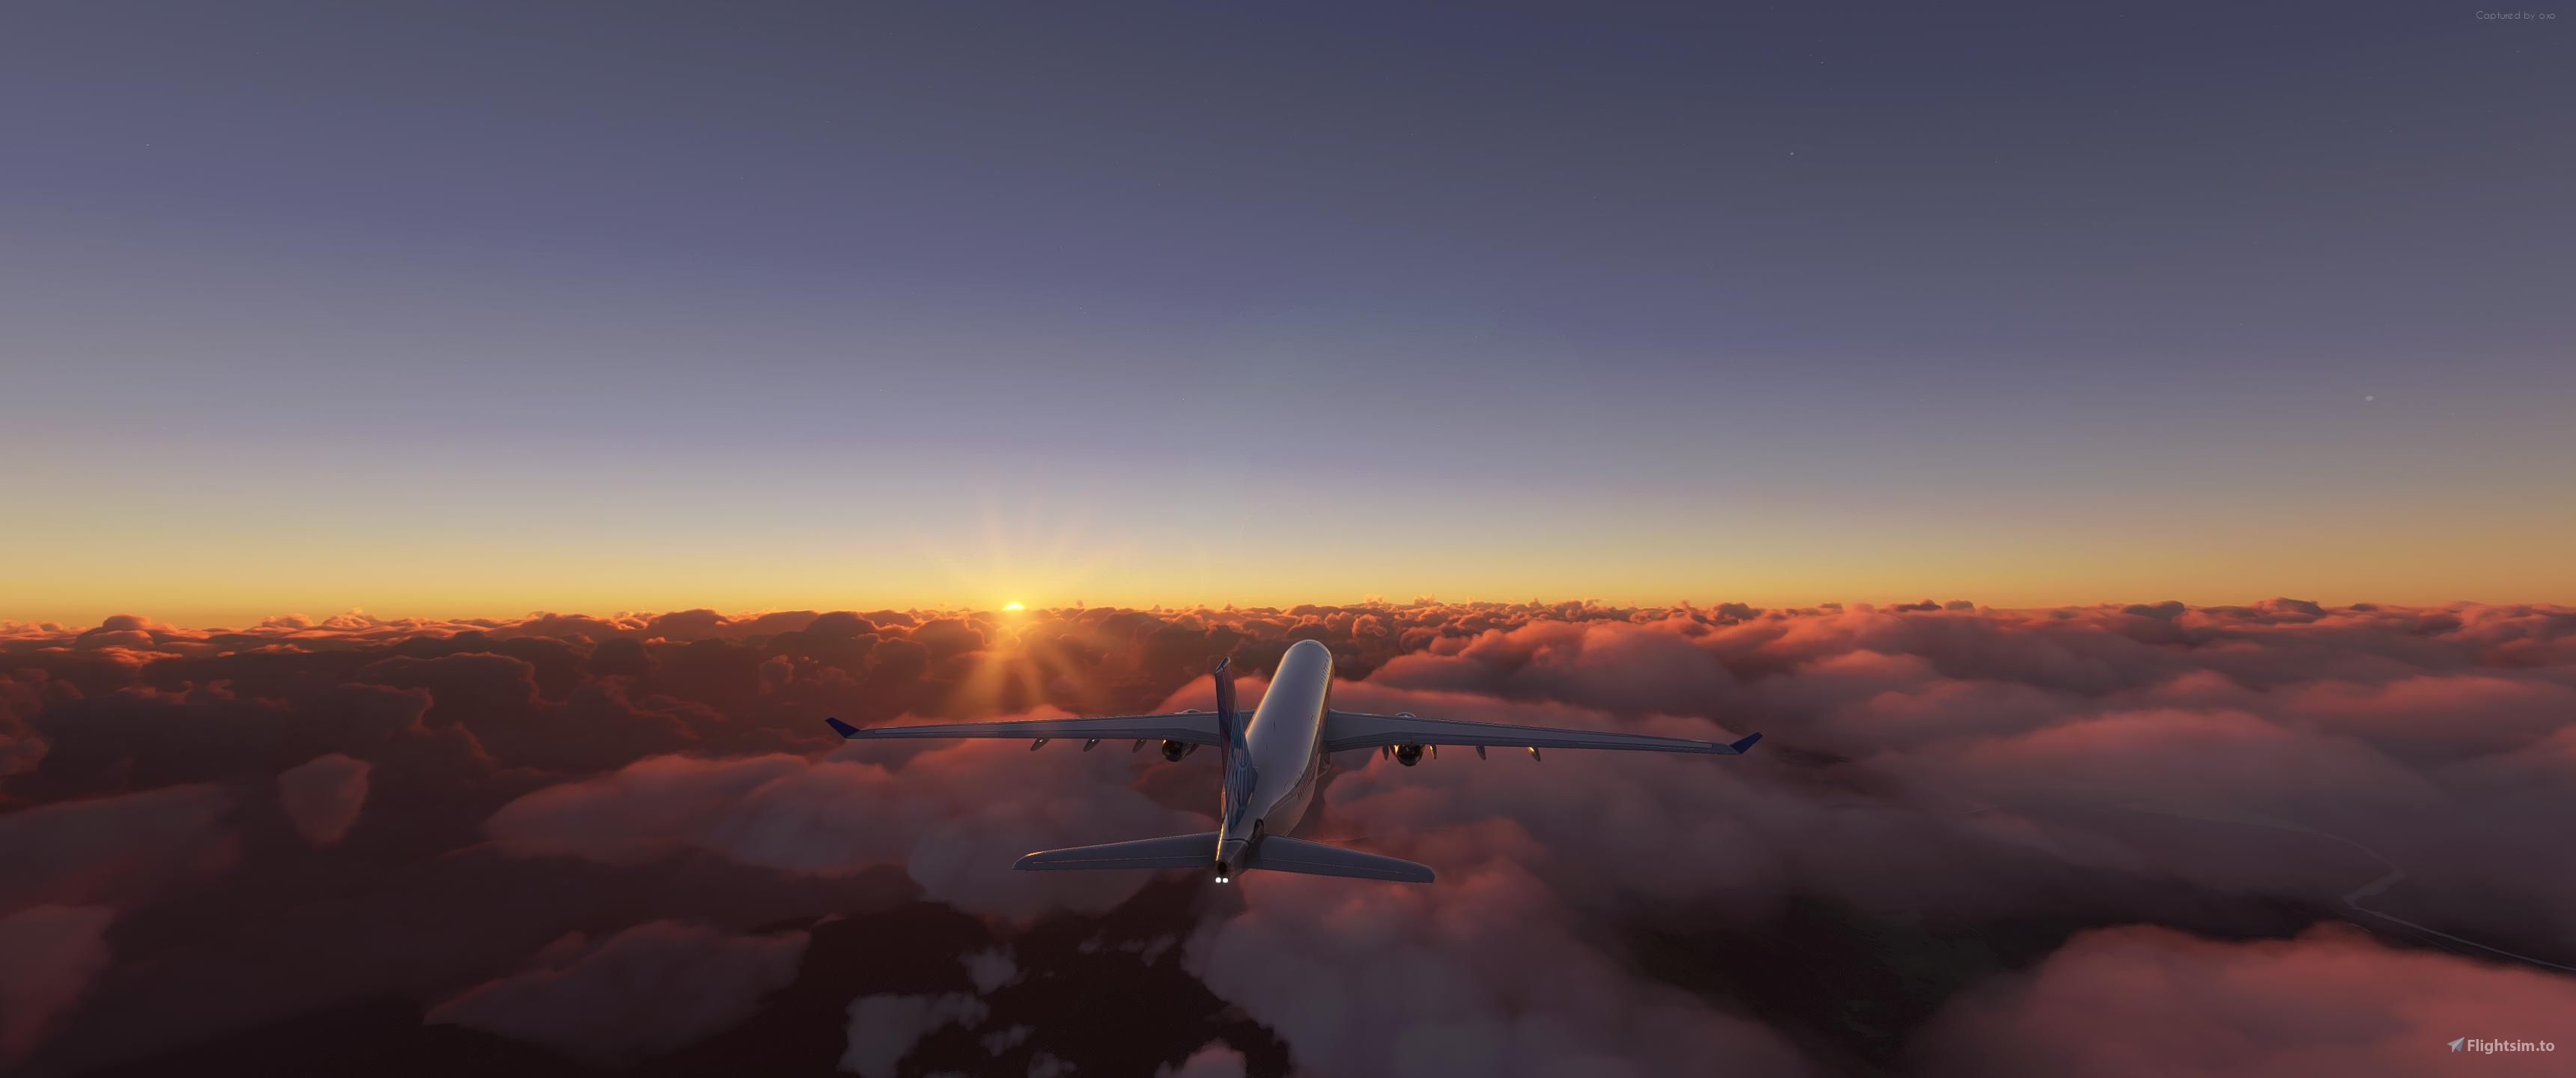 1440p microsoft flight simulator wallpaper